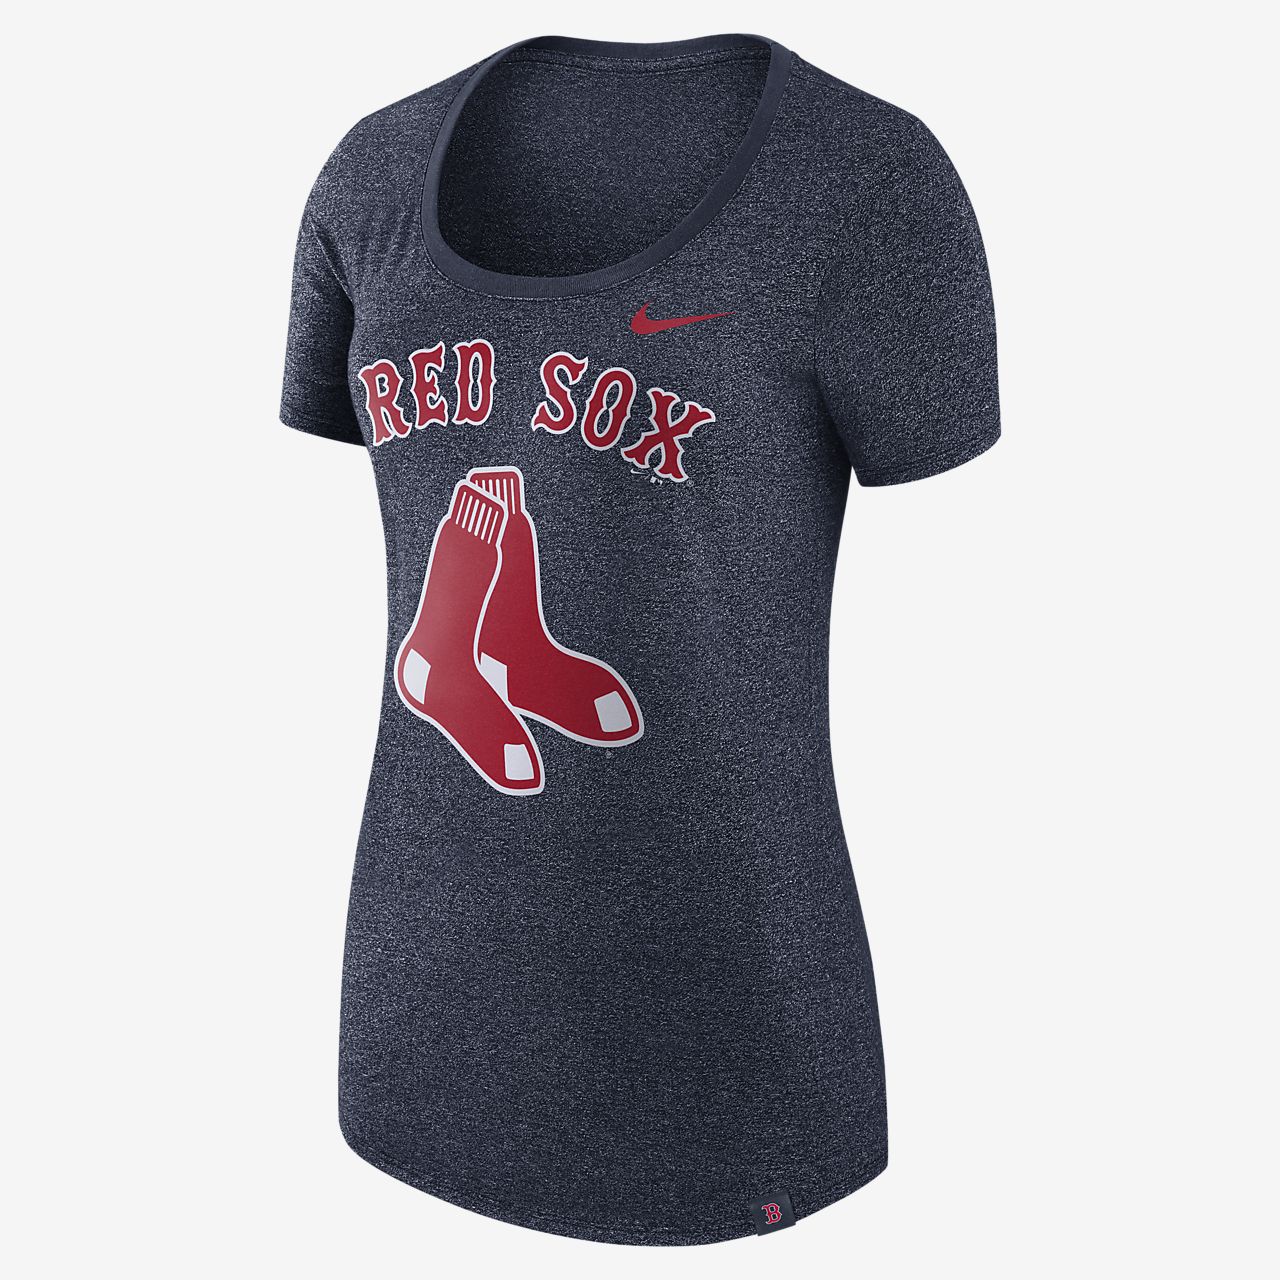 Nike Marled Boyfriend (MLB Red Sox) Women's T-Shirt. Nike.com